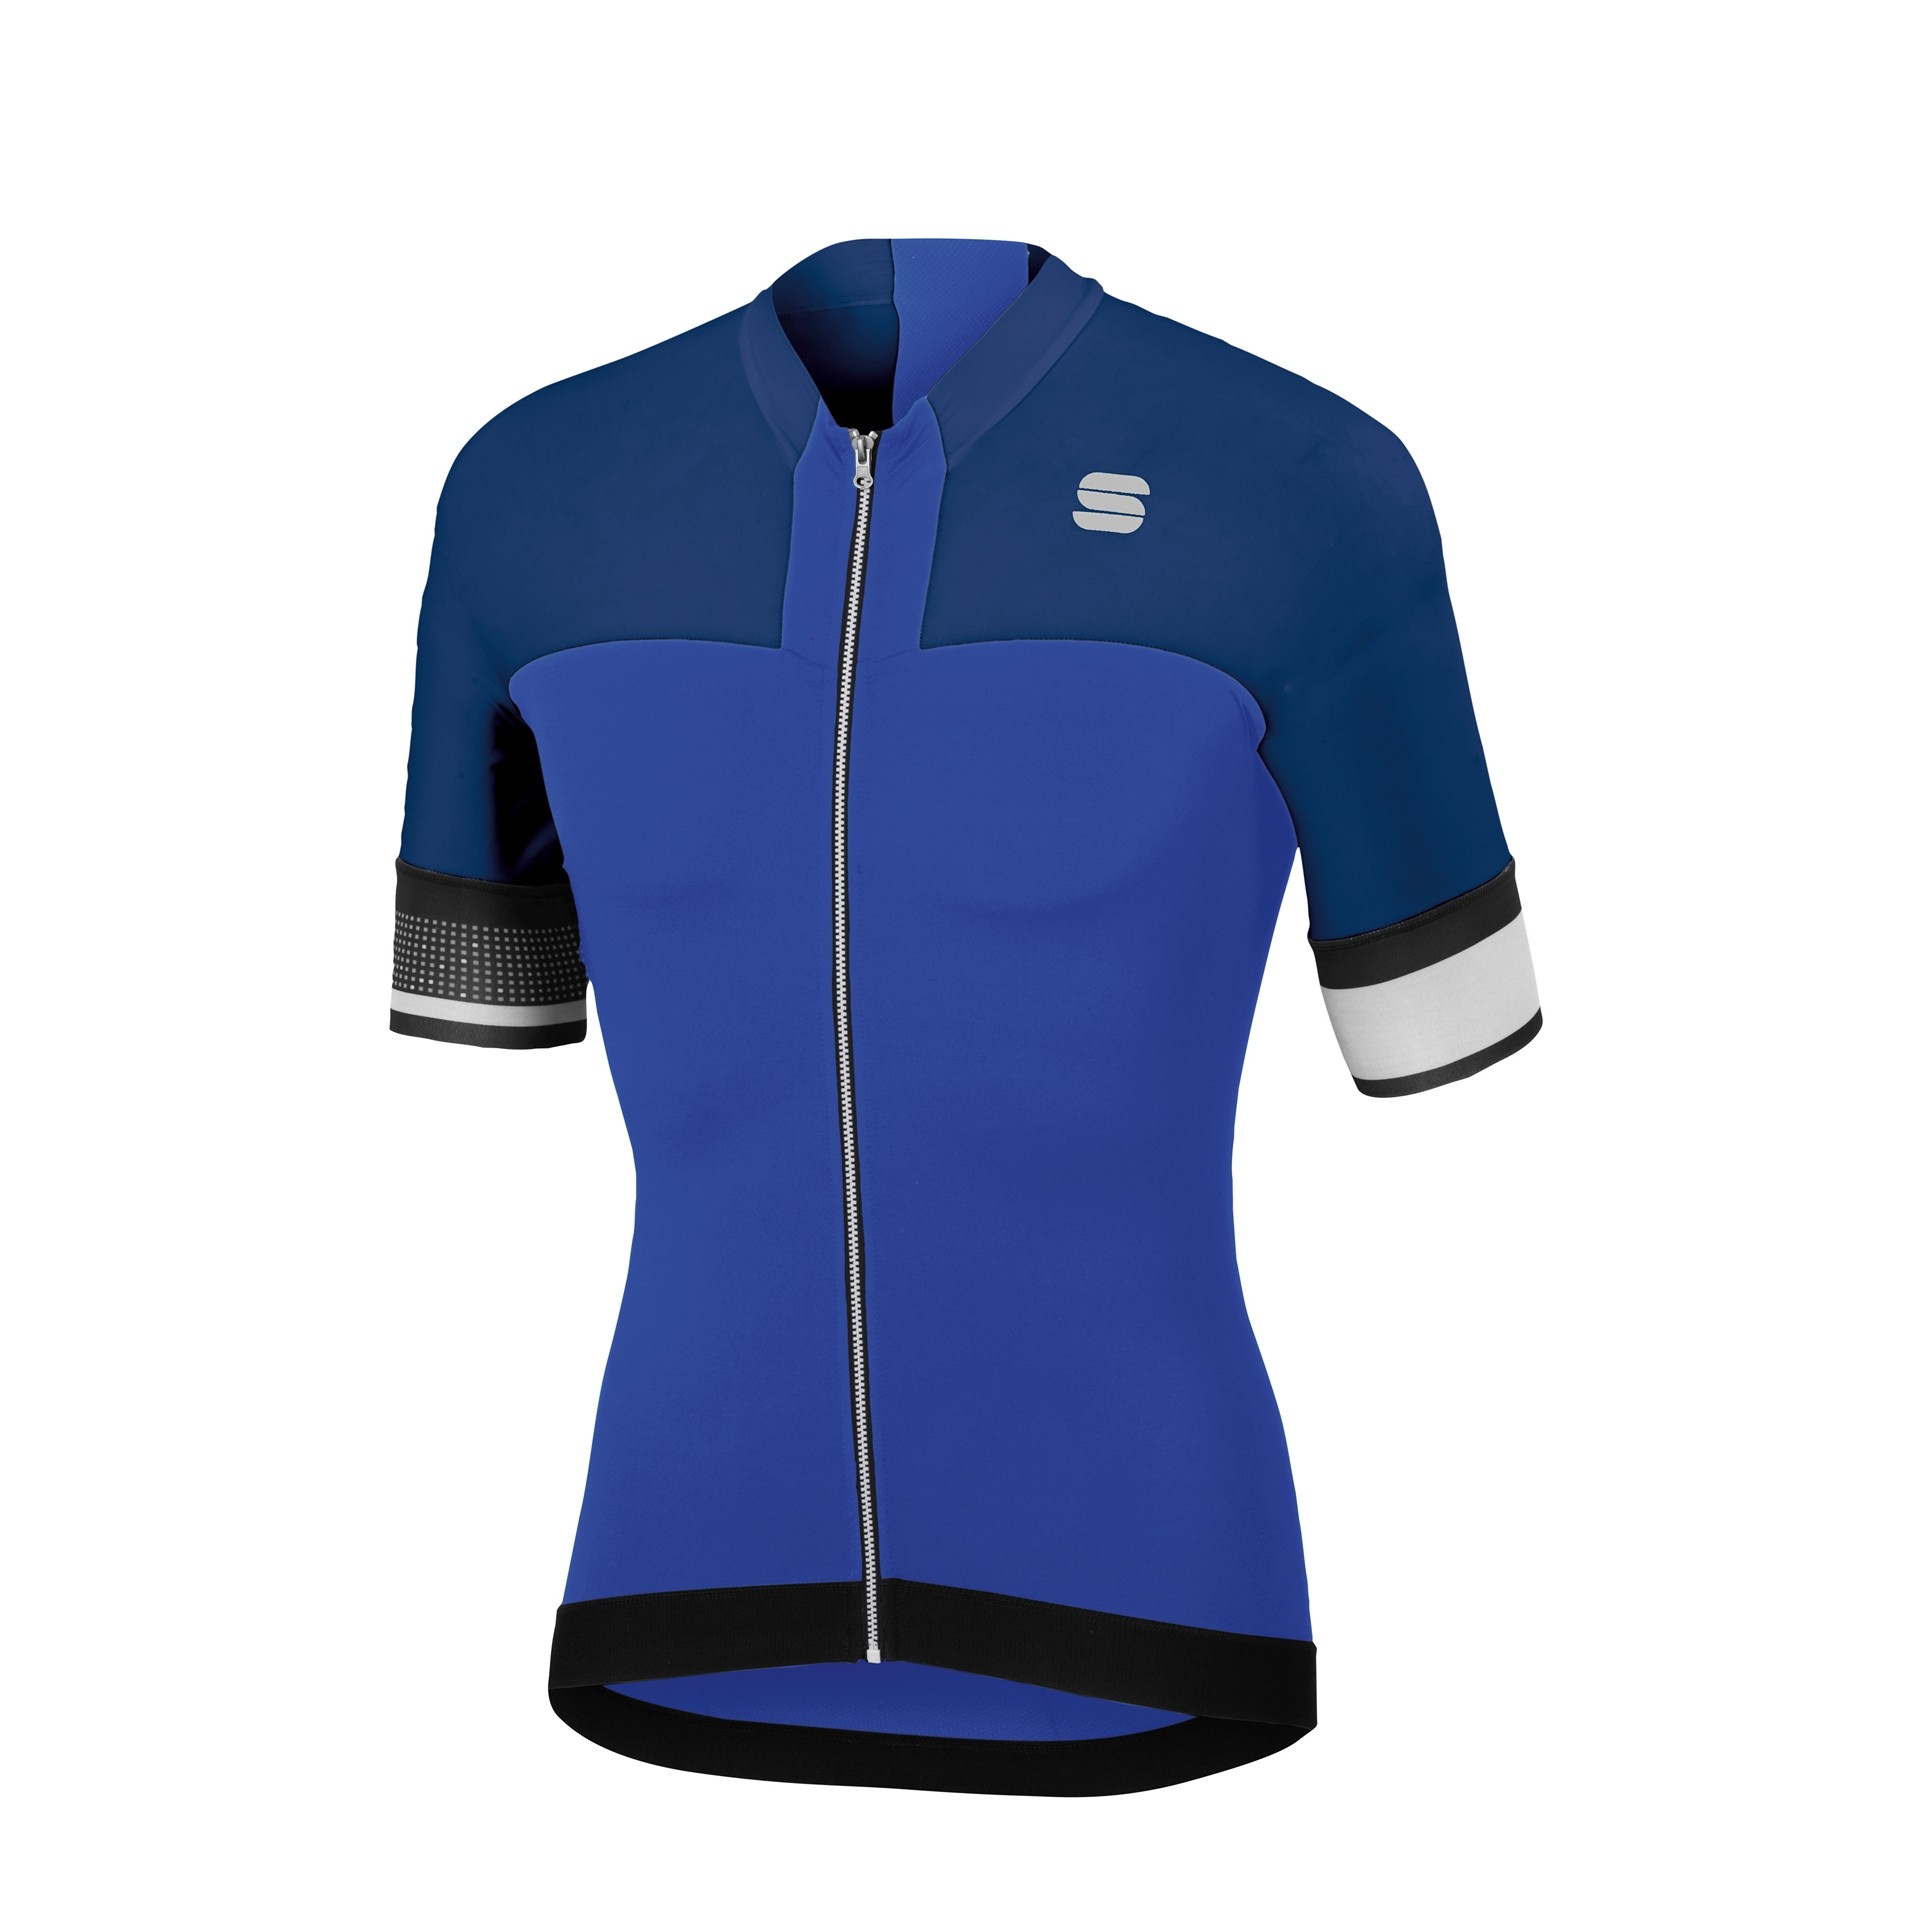 Sportful strike maillot de cyclisme manches courtes bleu cosmic twilight bleu